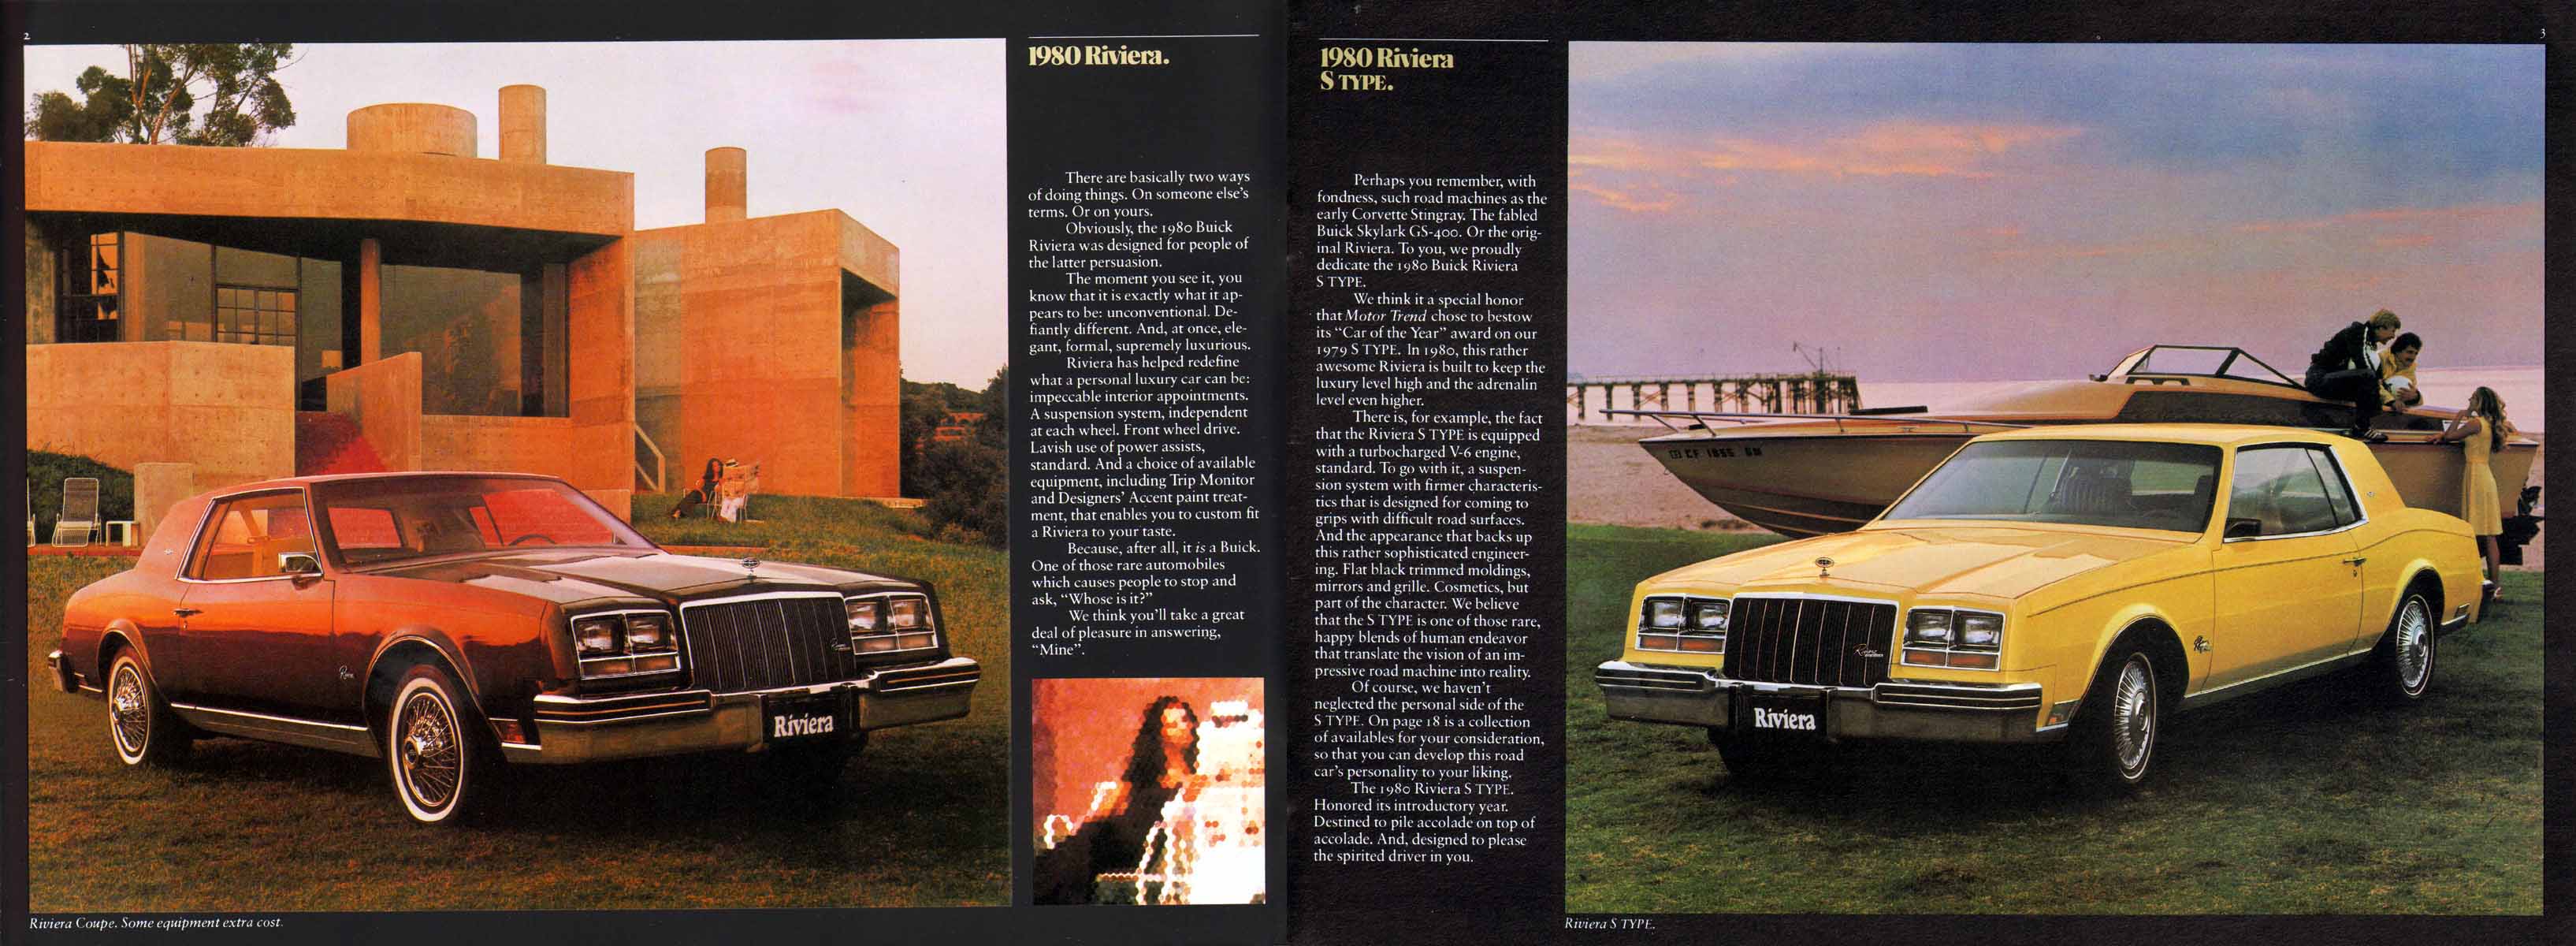 1980 Buick Riviera-02-03